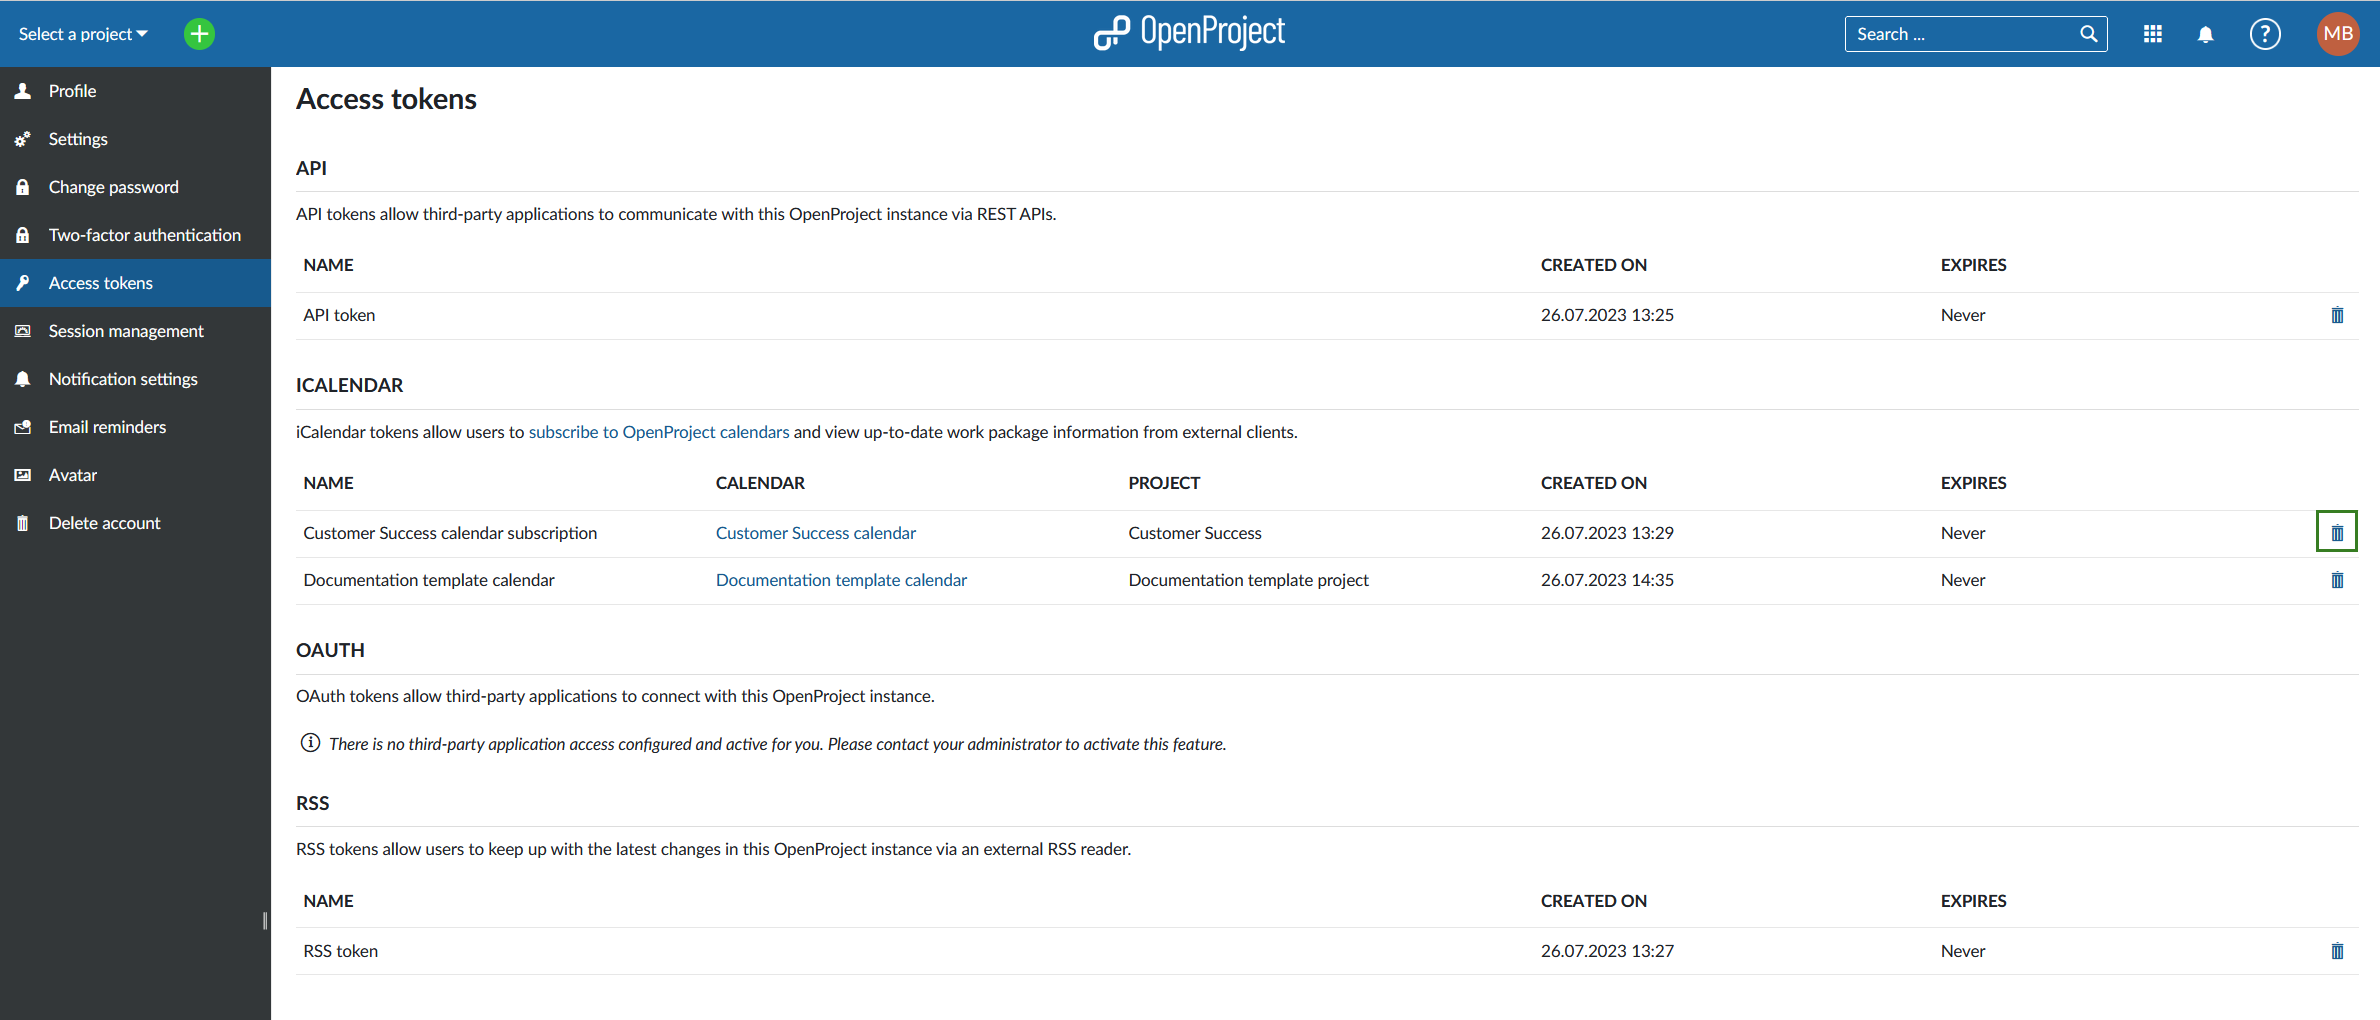 OWASP API Security Project | OWASP Foundation